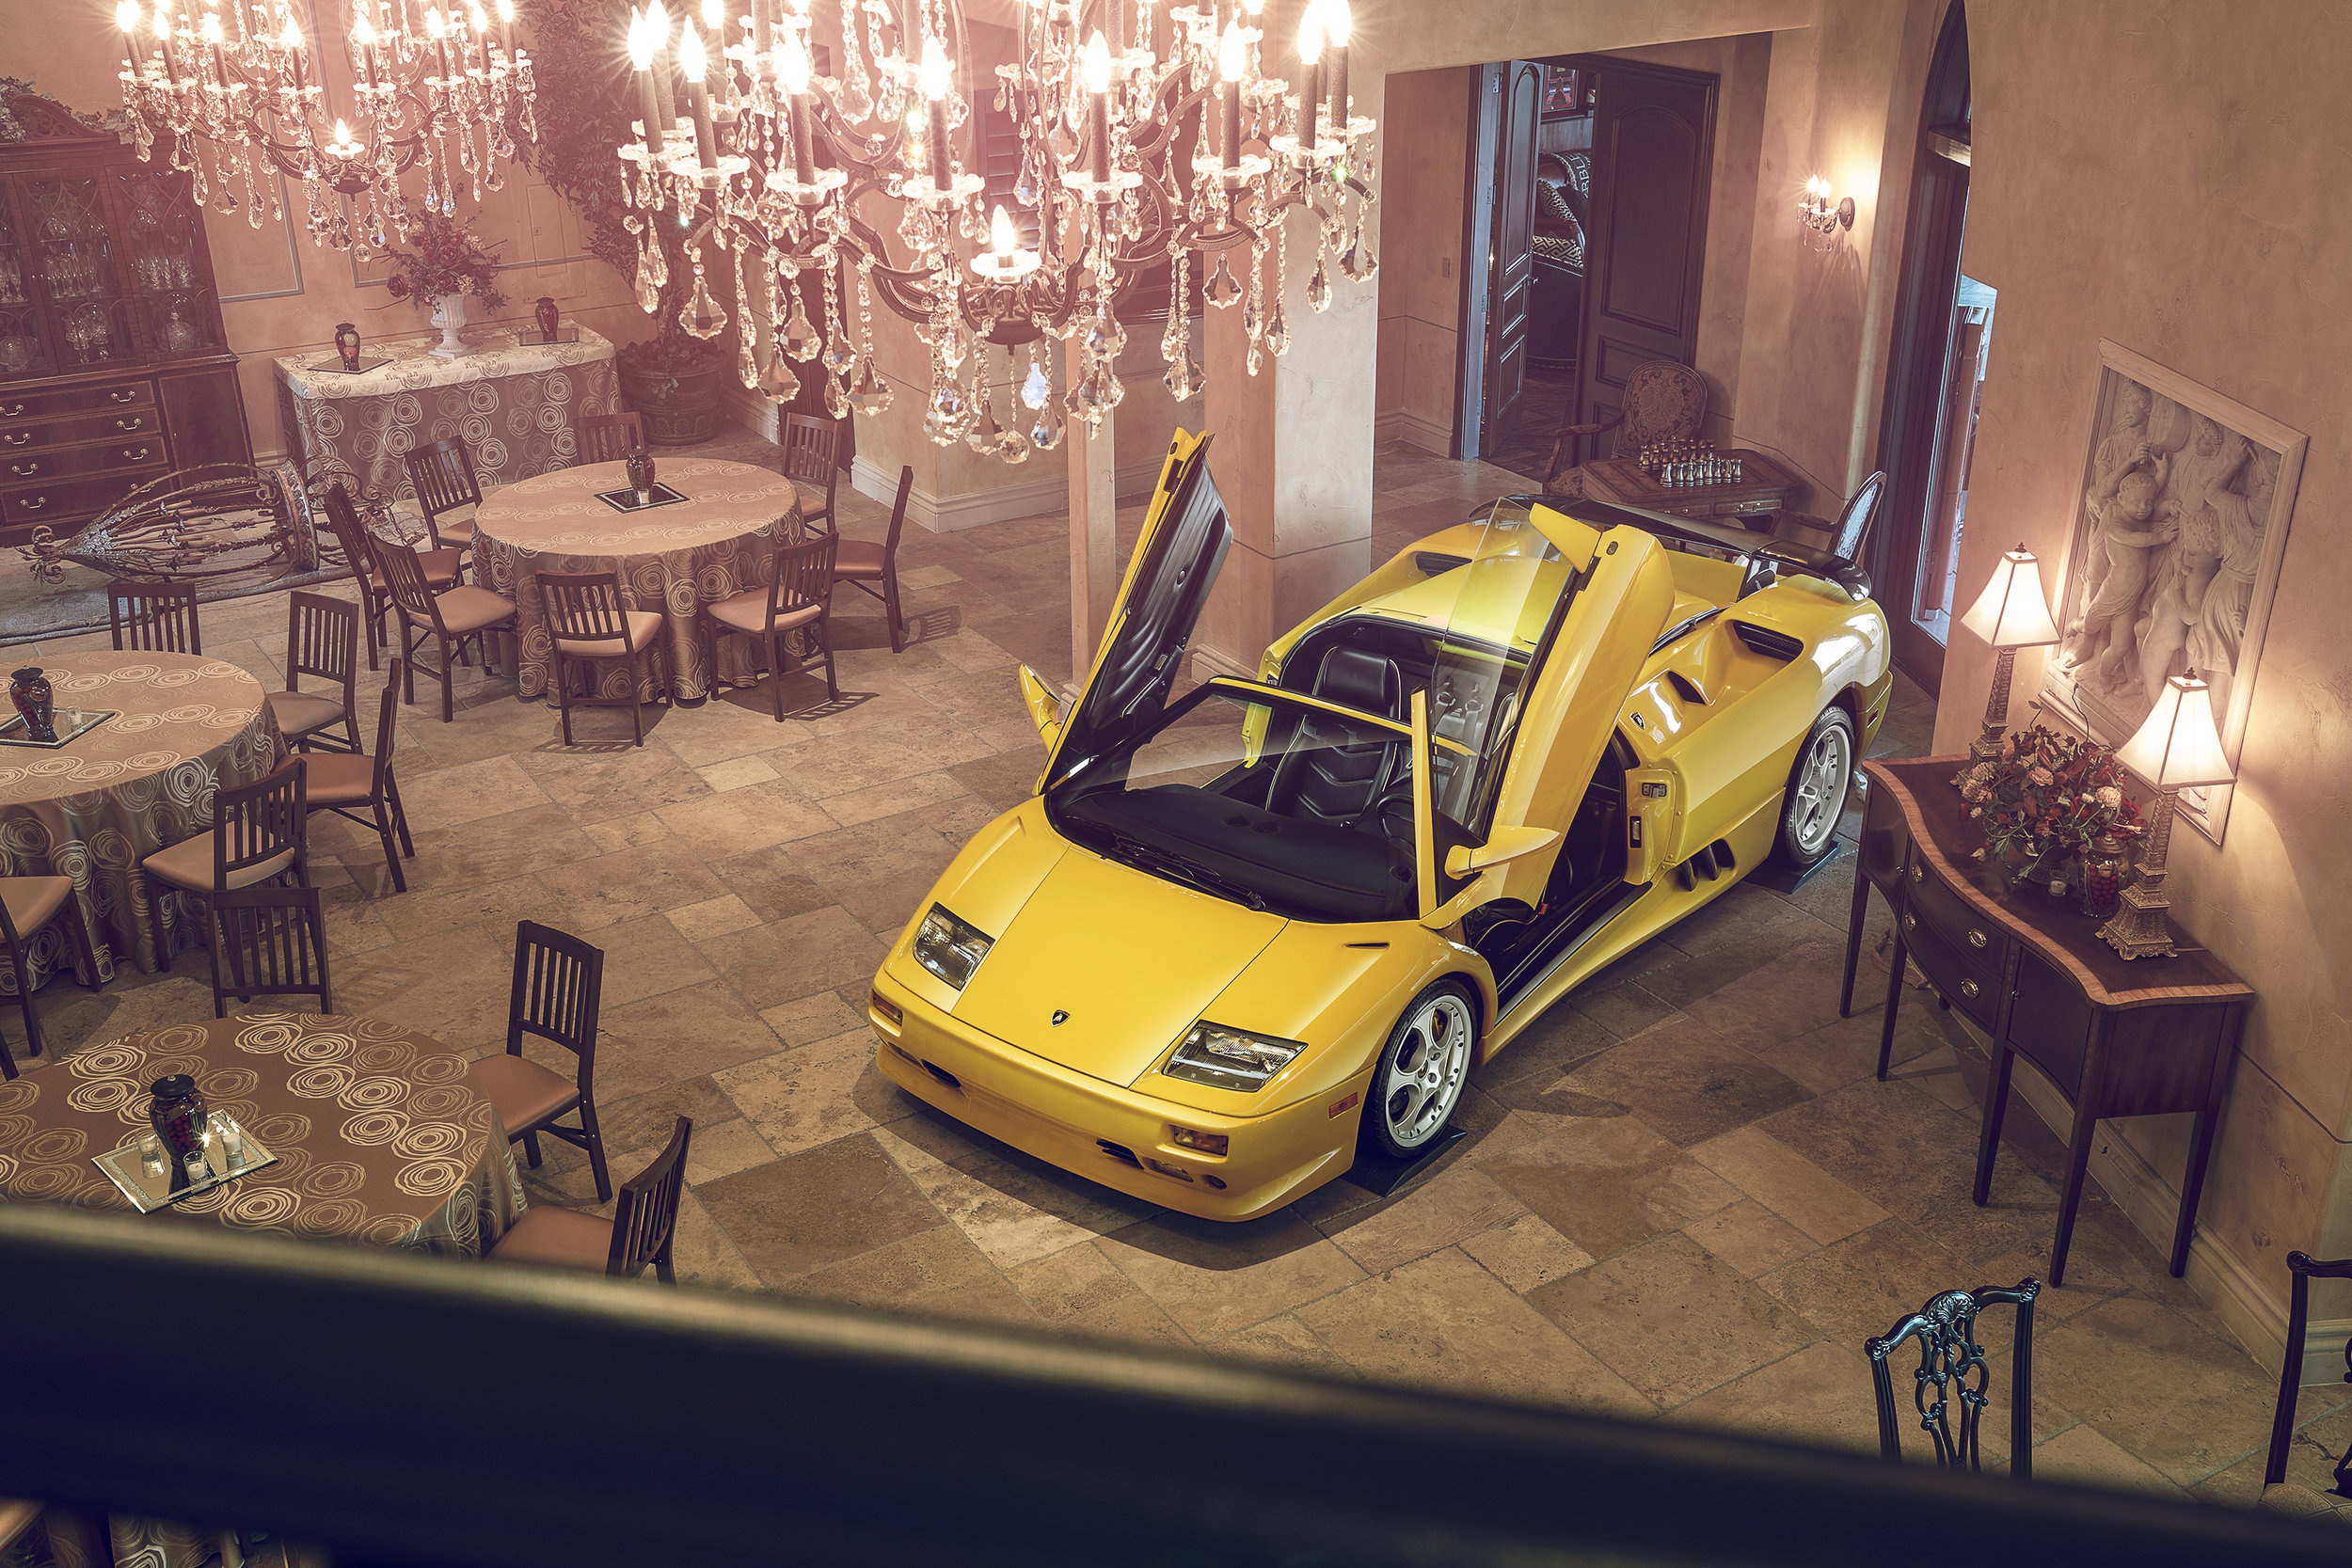 General 2500x1667 car vehicle yellow dress Lamborghini high angle Lamborghini Diablo restaurant chandeliers scissor doors